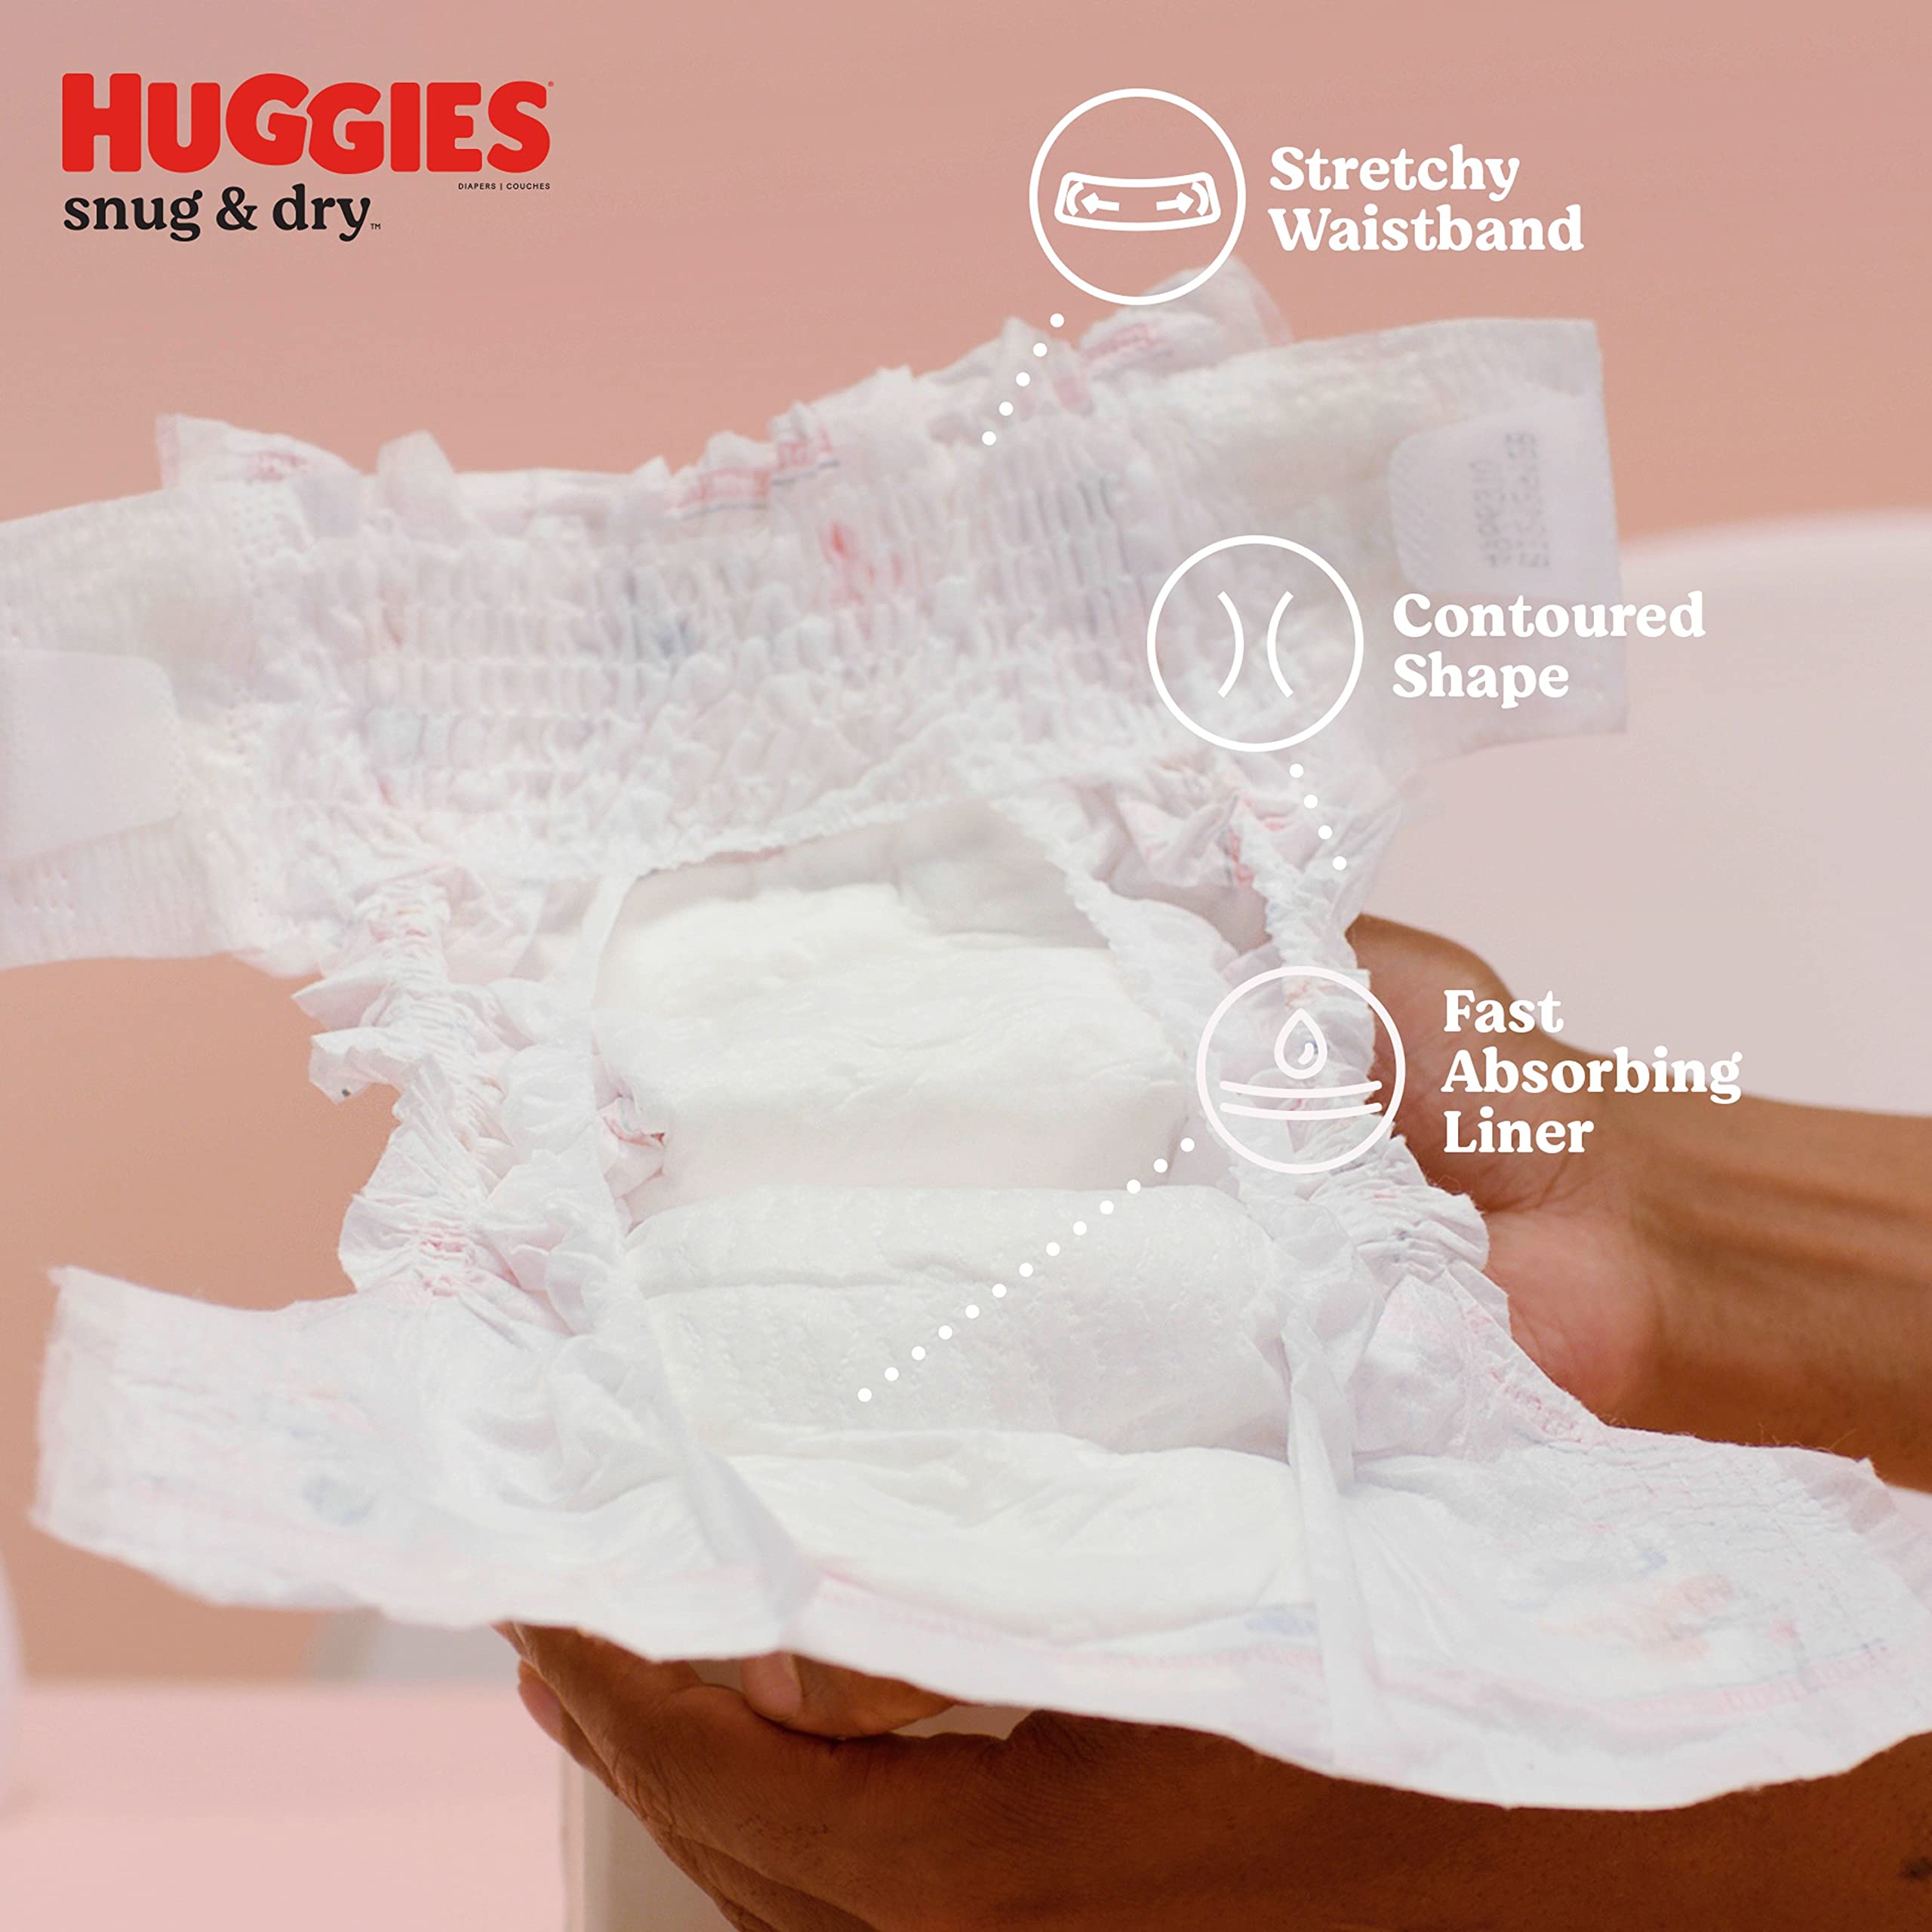 Huggies Snug & Dry Baby Diapers, Size 6 (35+ lbs), 124 Ct